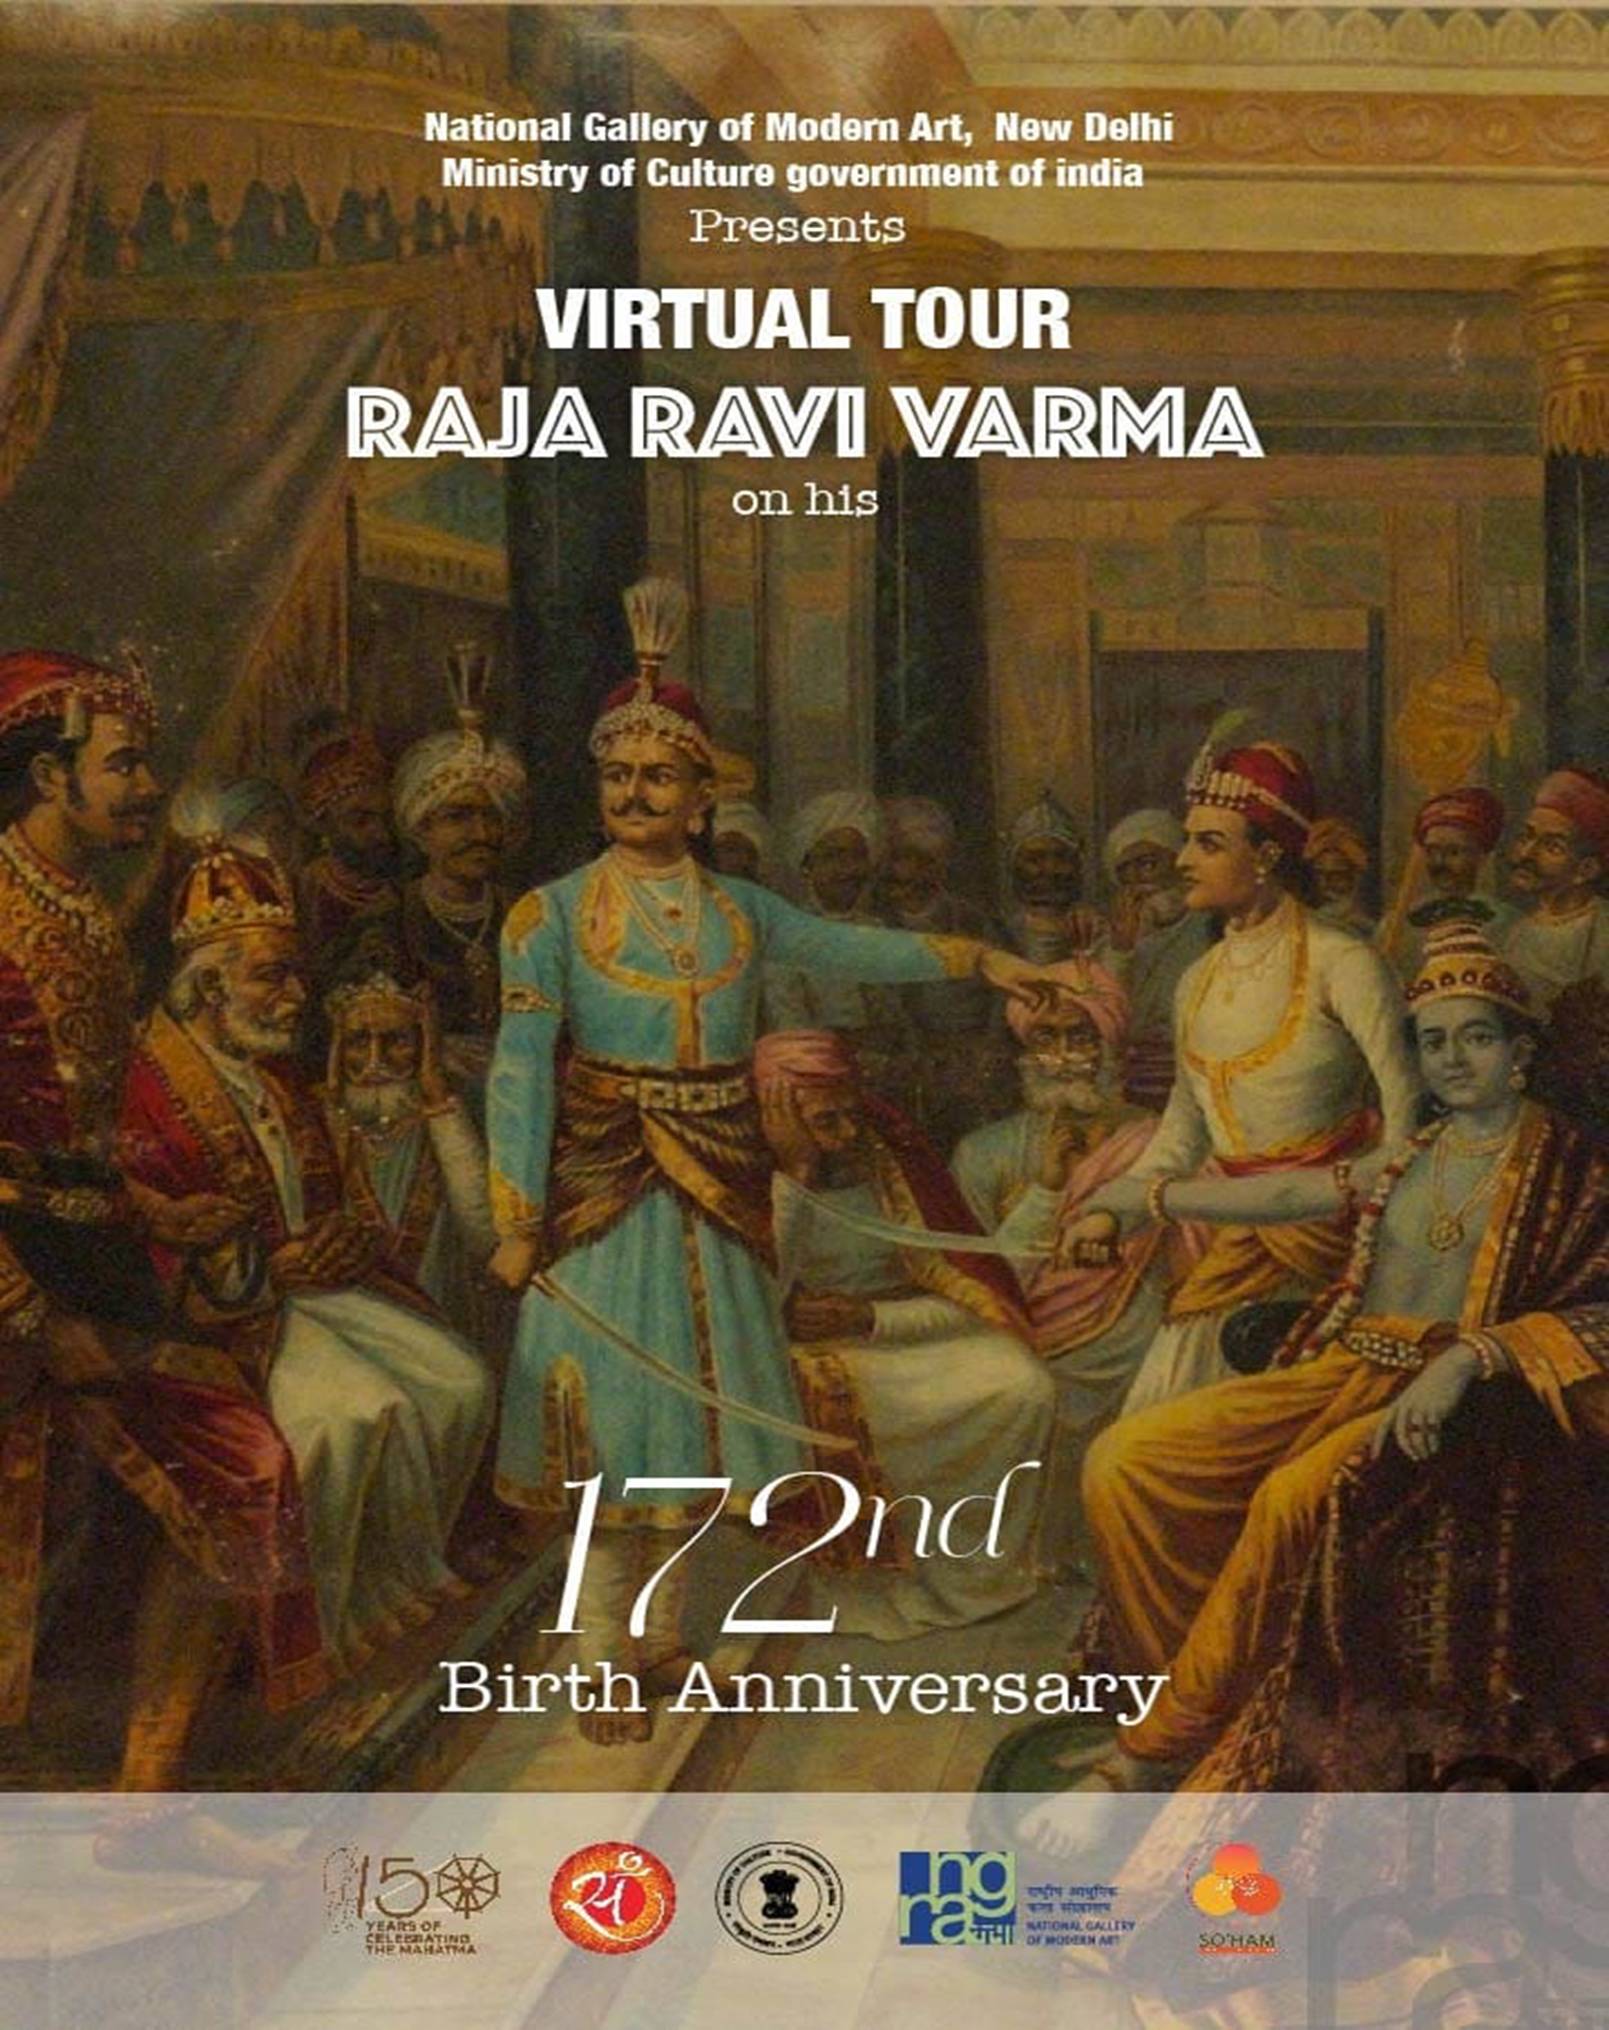 NGMA pays tribute to Raja Ravi Varma on his 172nd Birth Anniversary decoding=